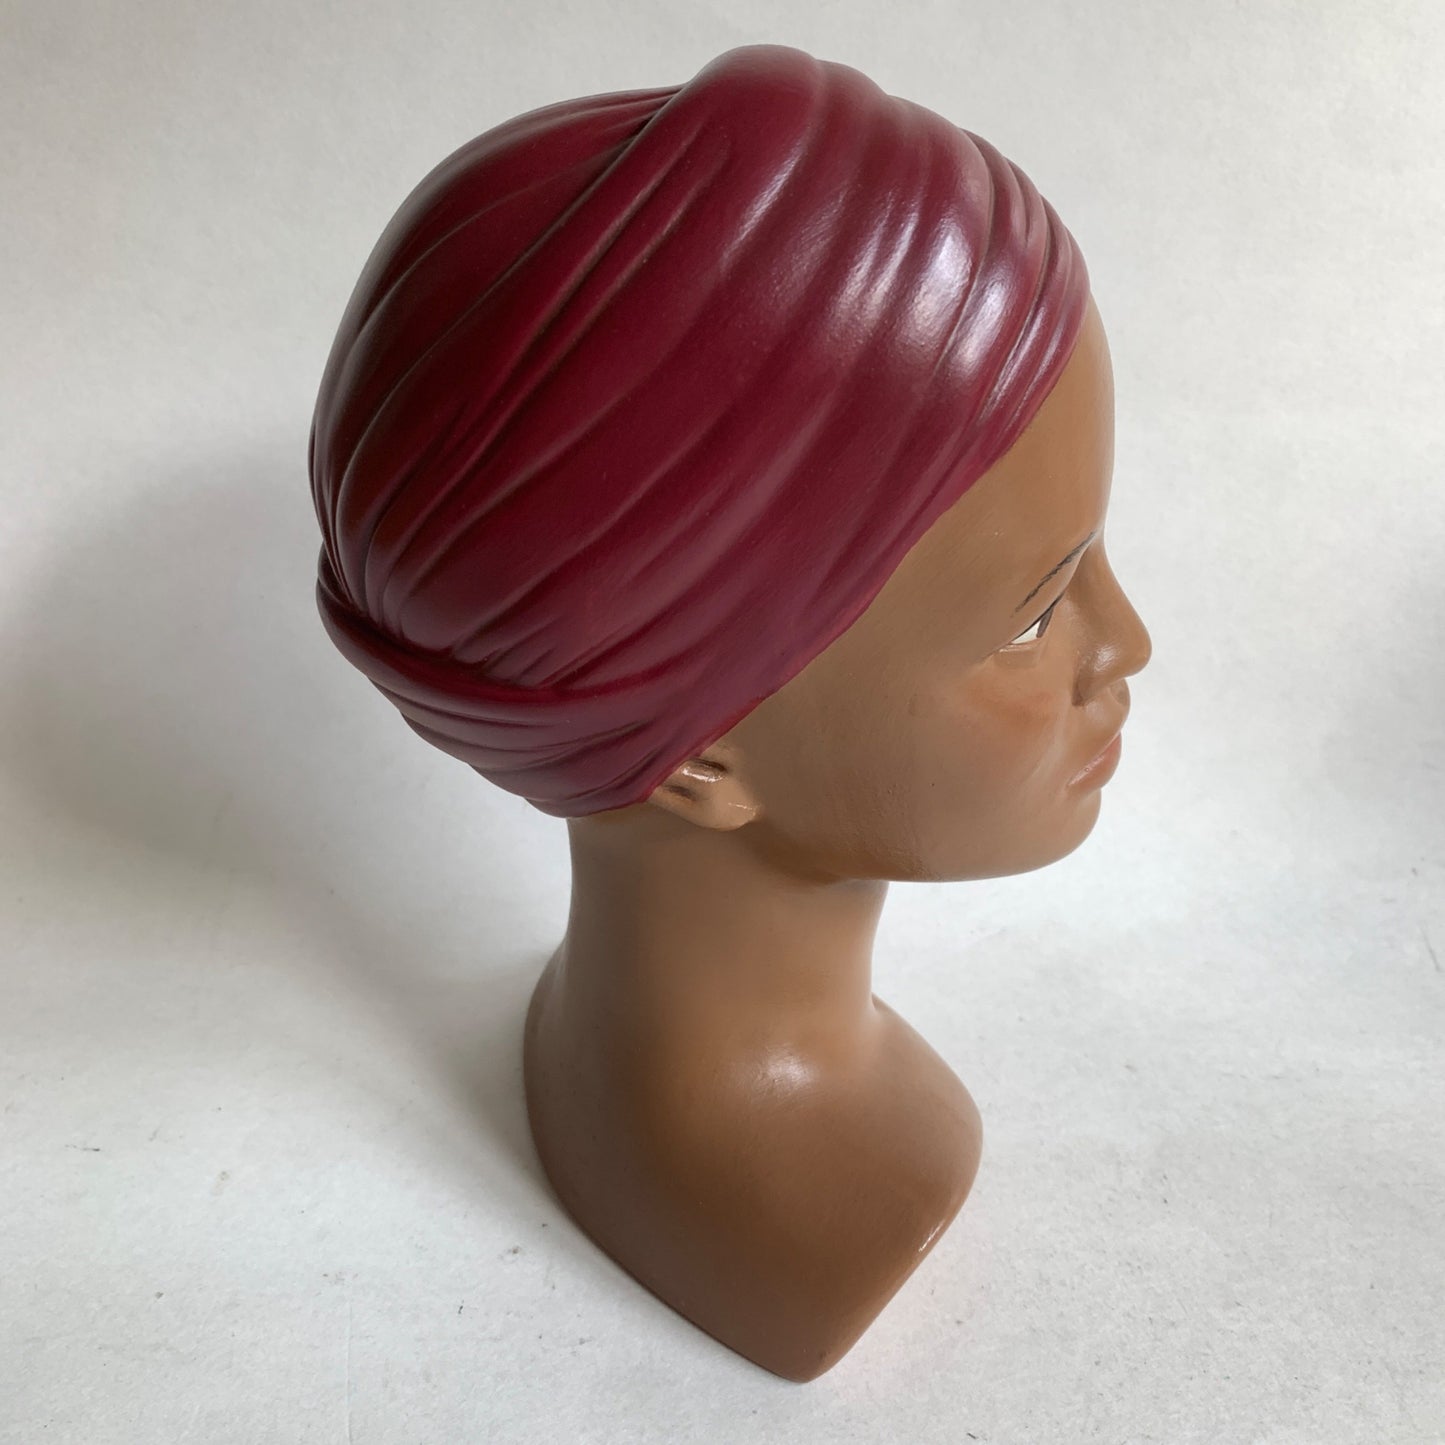 Vintage 1977 Holland Mold Woman's Head Chalkware Turban